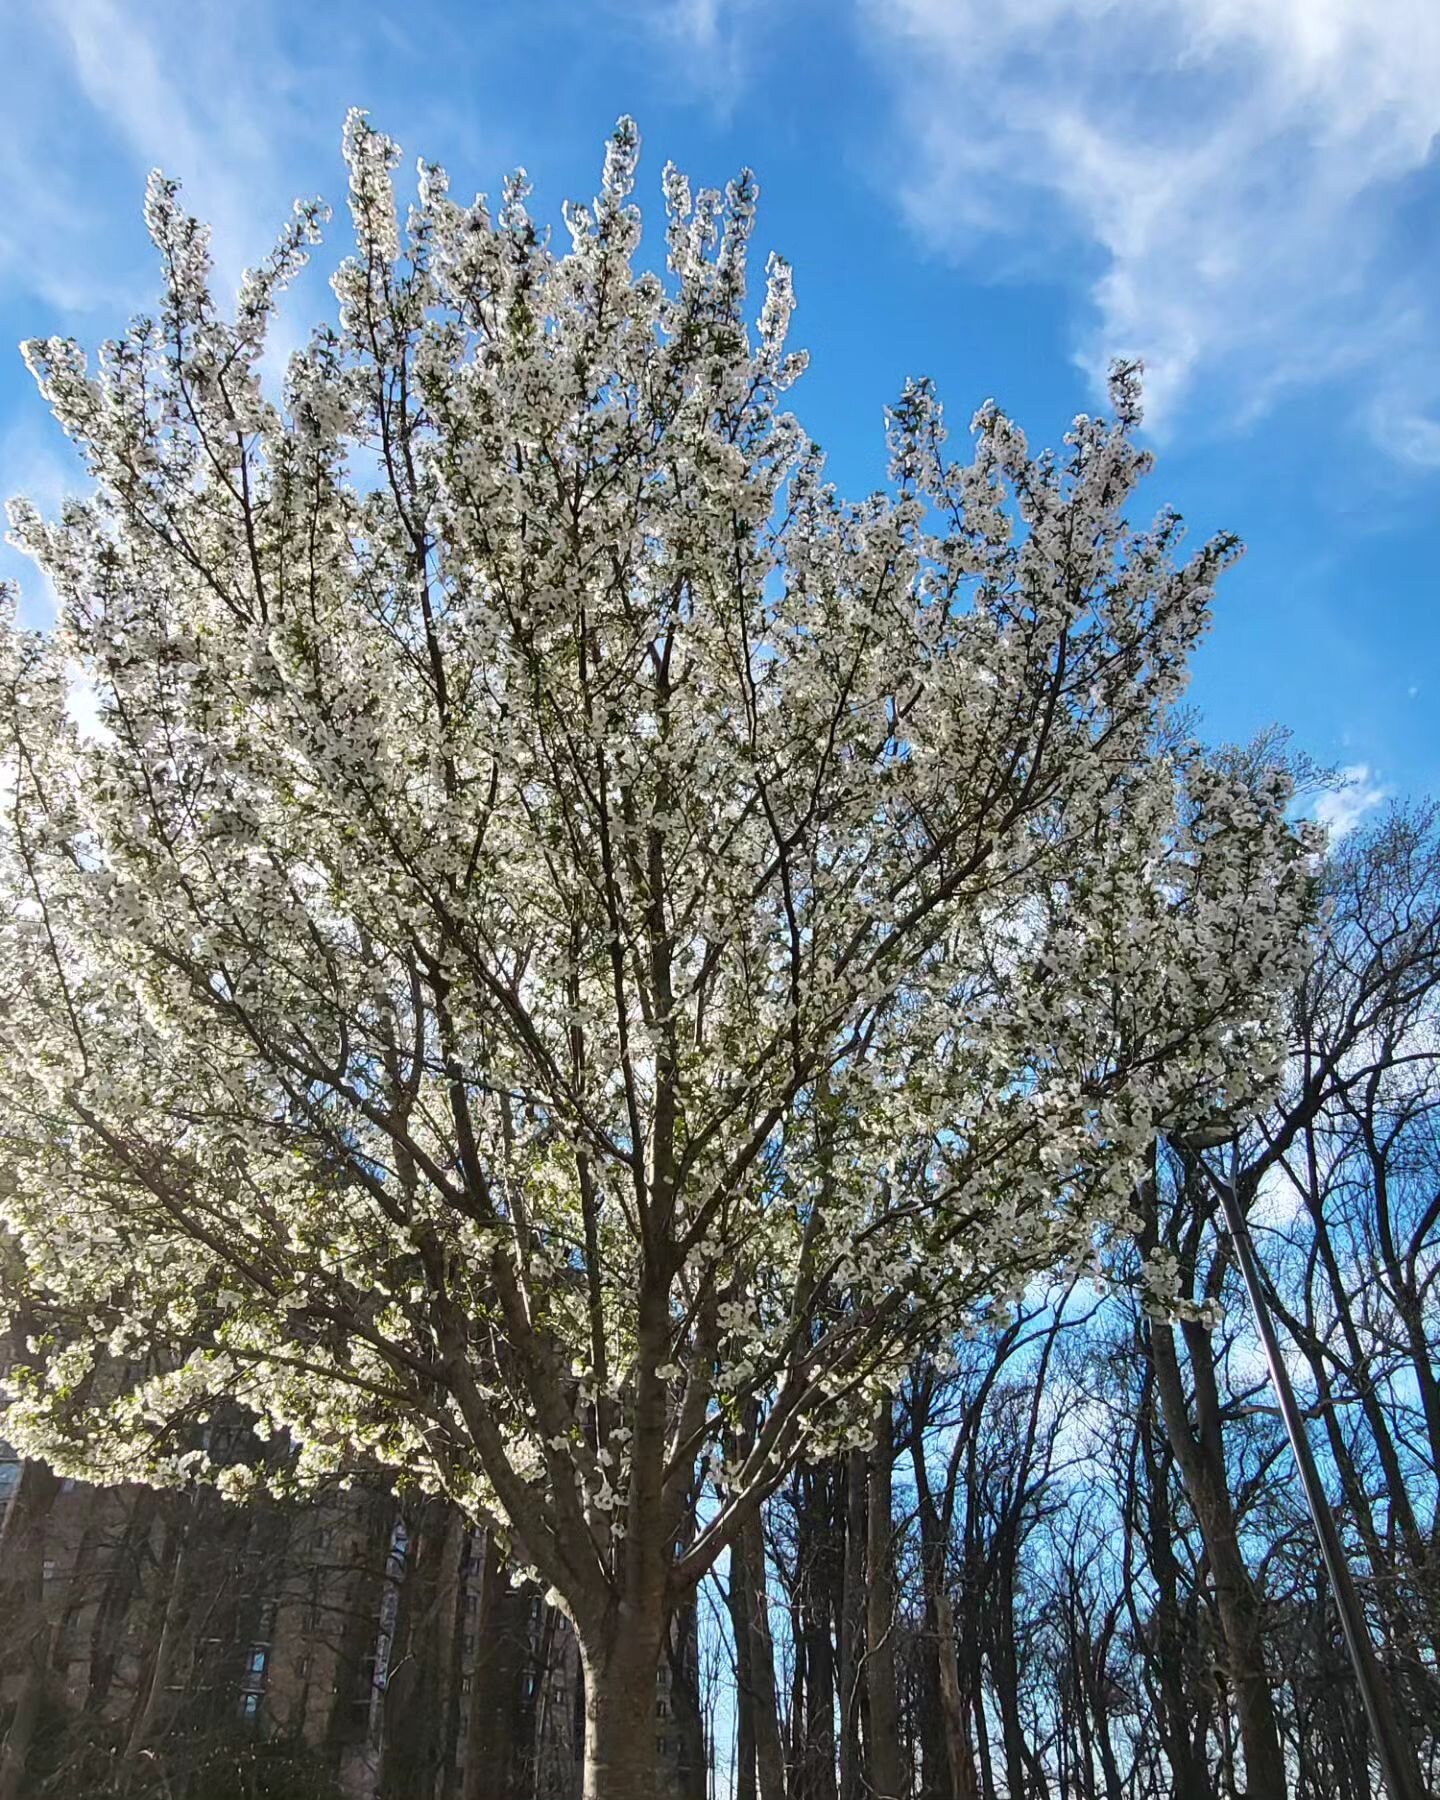 It's #cherryblossom season in #DC.

#cherry #blossom #washington #washingtondc #insta #ig_northamerica #instagood #Instagram #spring #tree #trees #photooftheday #picoftheday #photo #travelgram